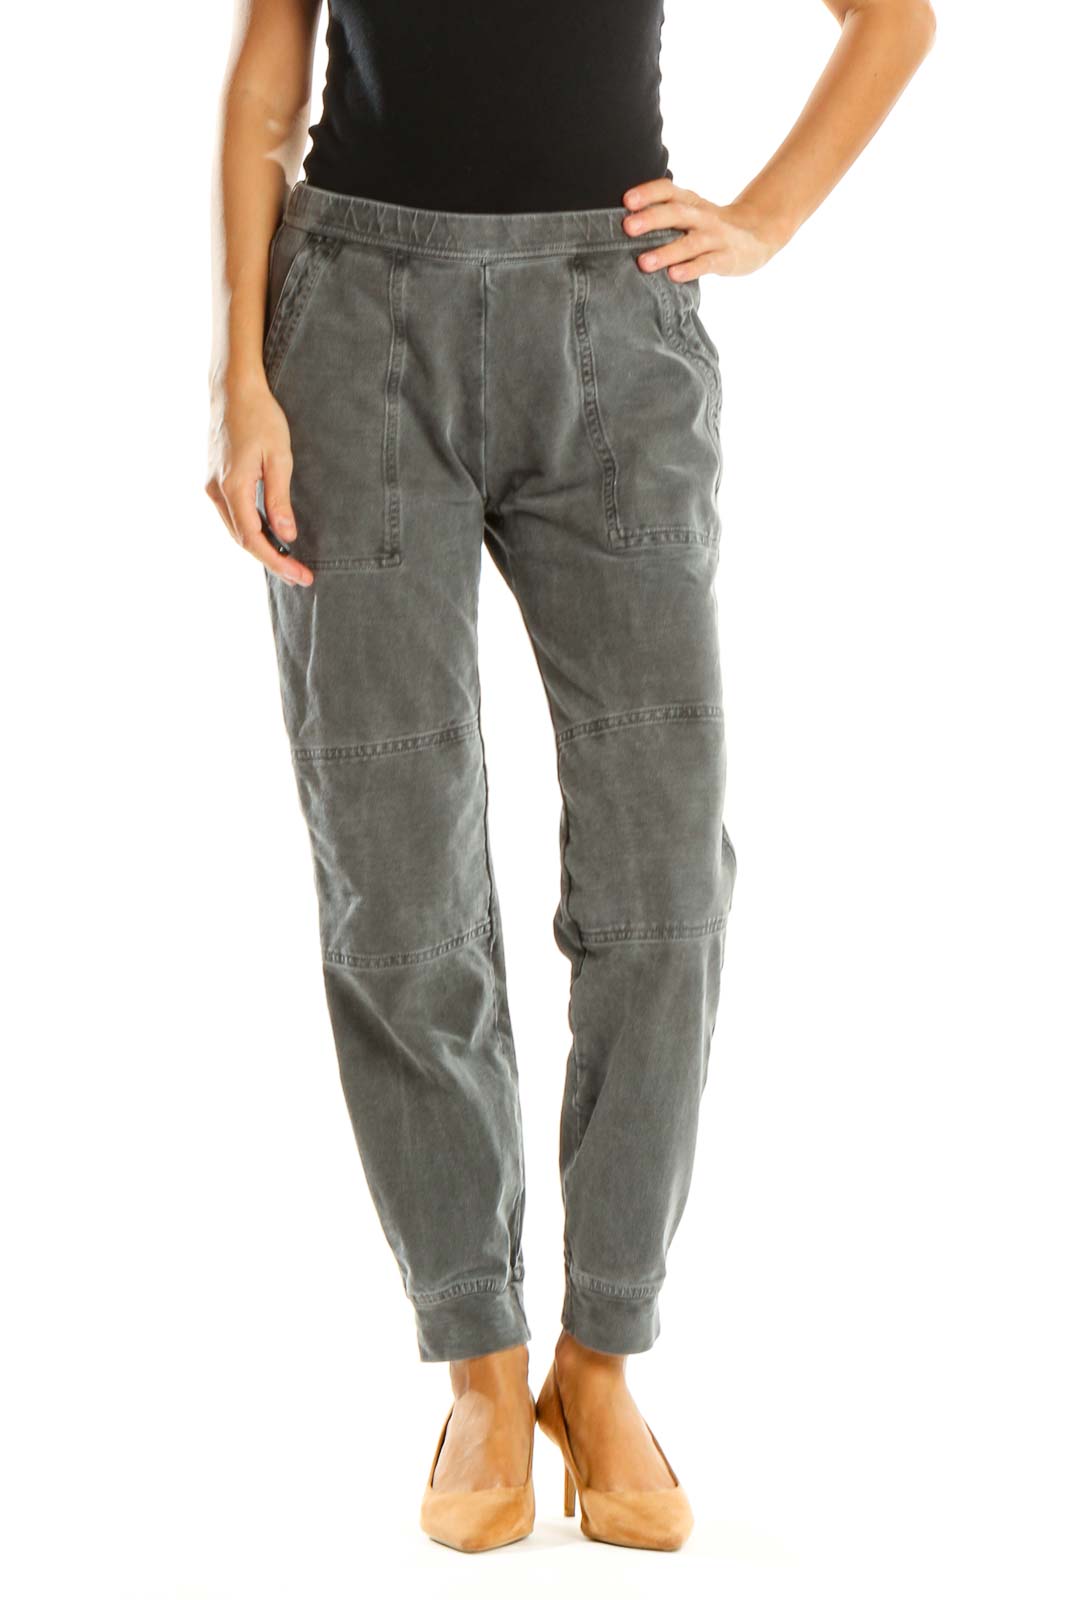 Gray Sweatpants Front